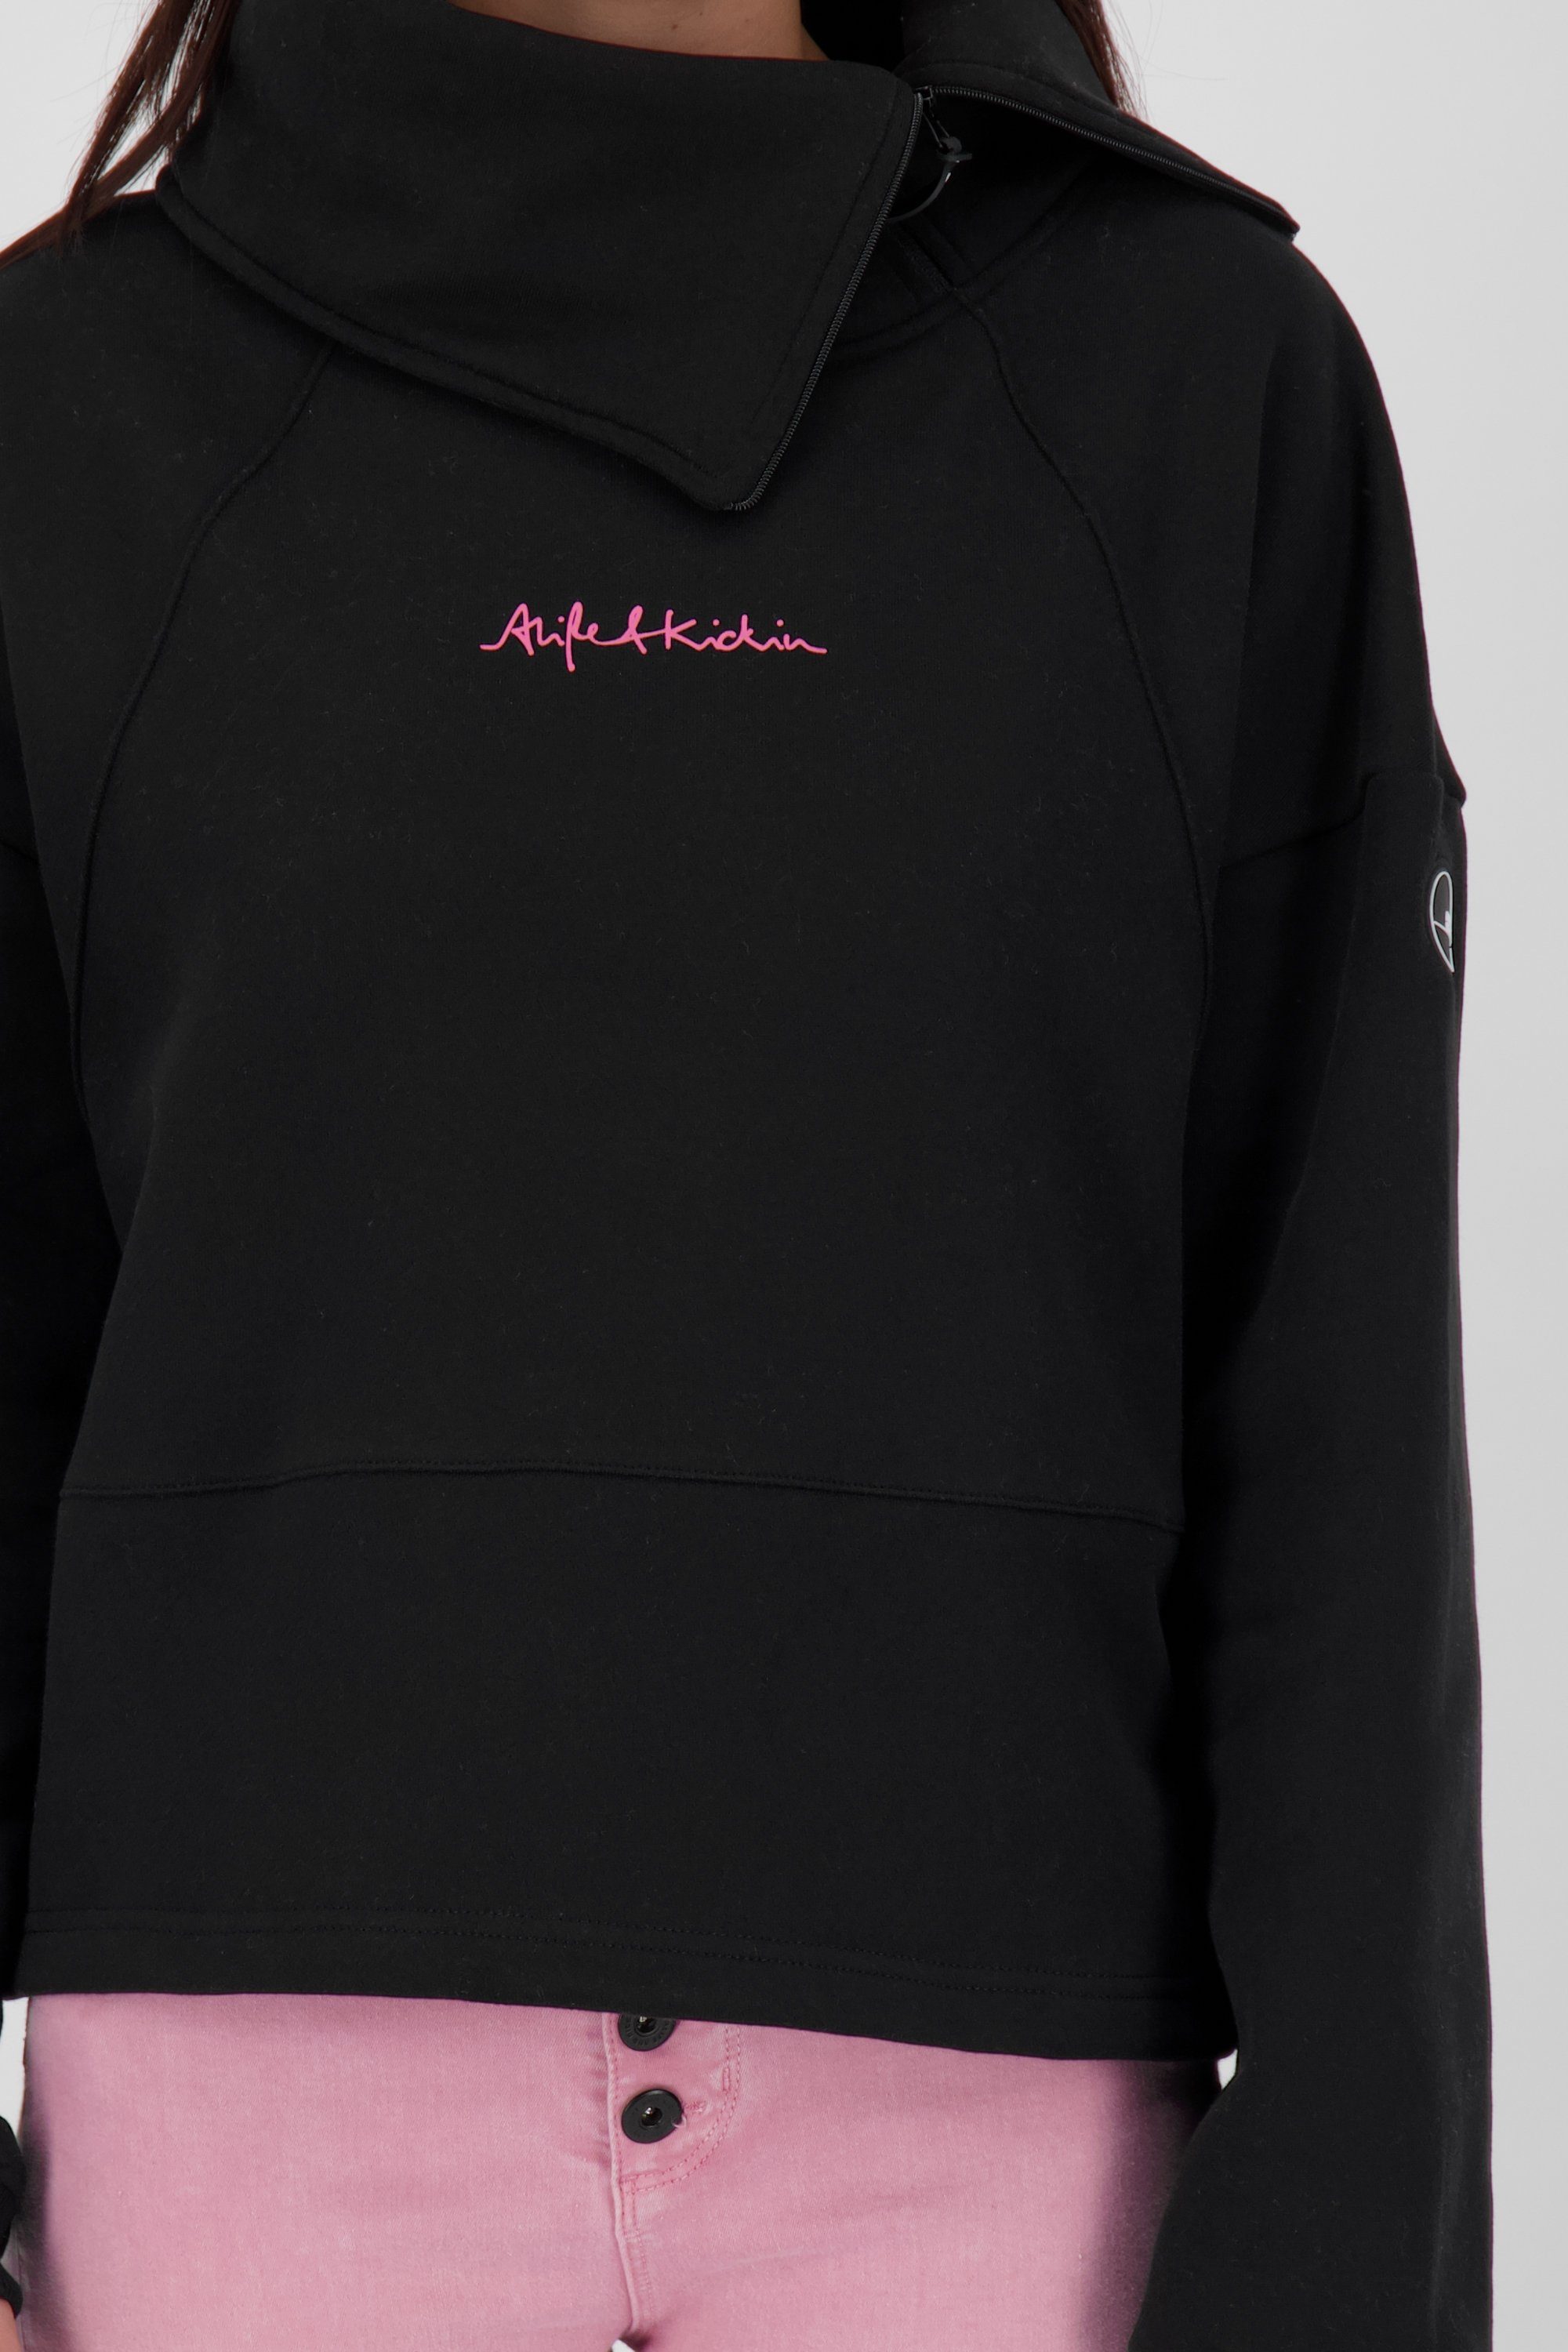 Alife & Damen Sweatshirt A Sweat LiaAK moonless Kickin Sweatshirt